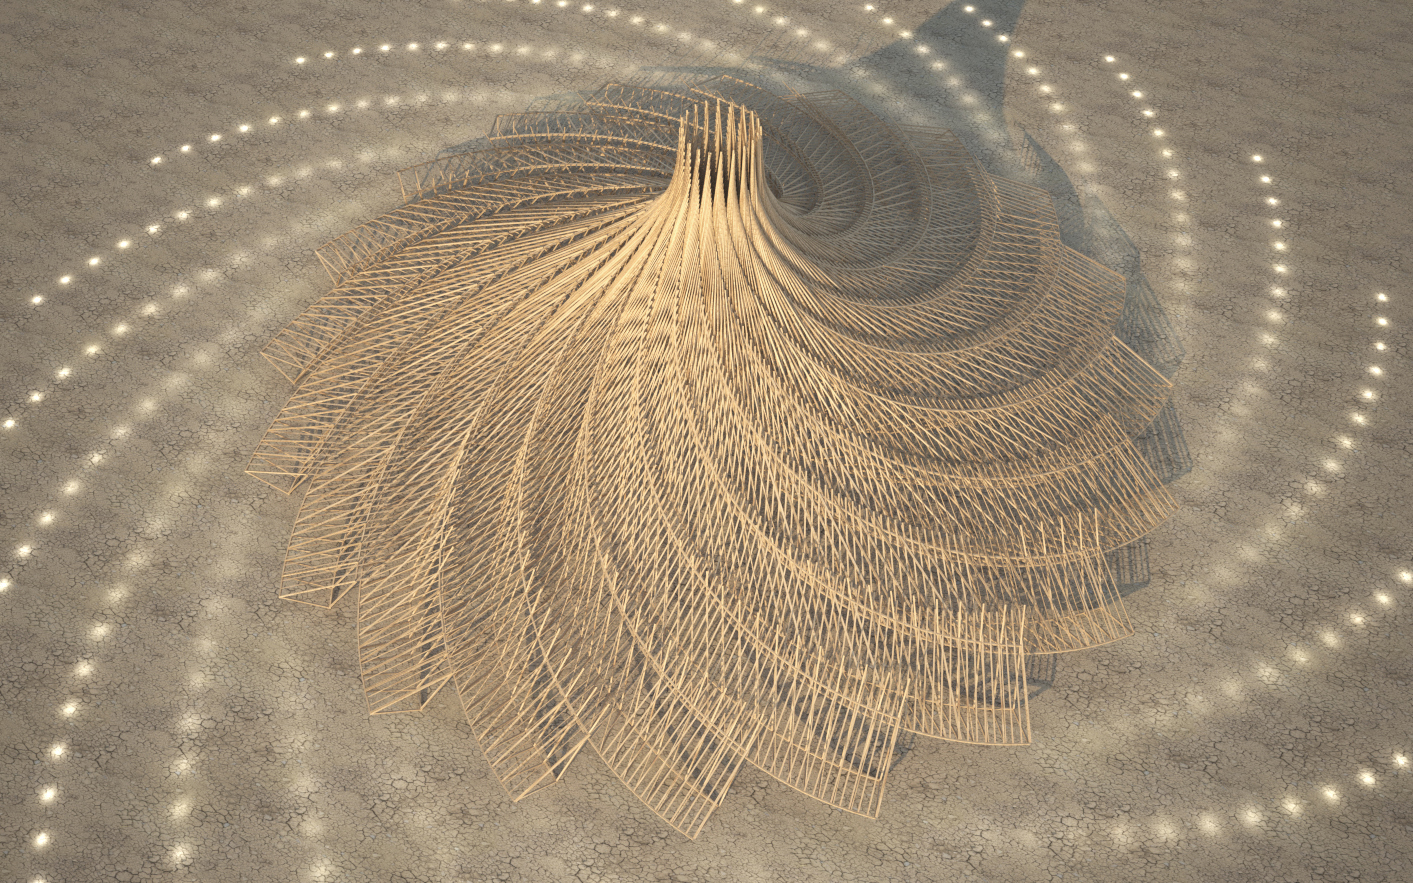 'Galaxia', 2018 Burning Man temple by Mamou-Mani Architects